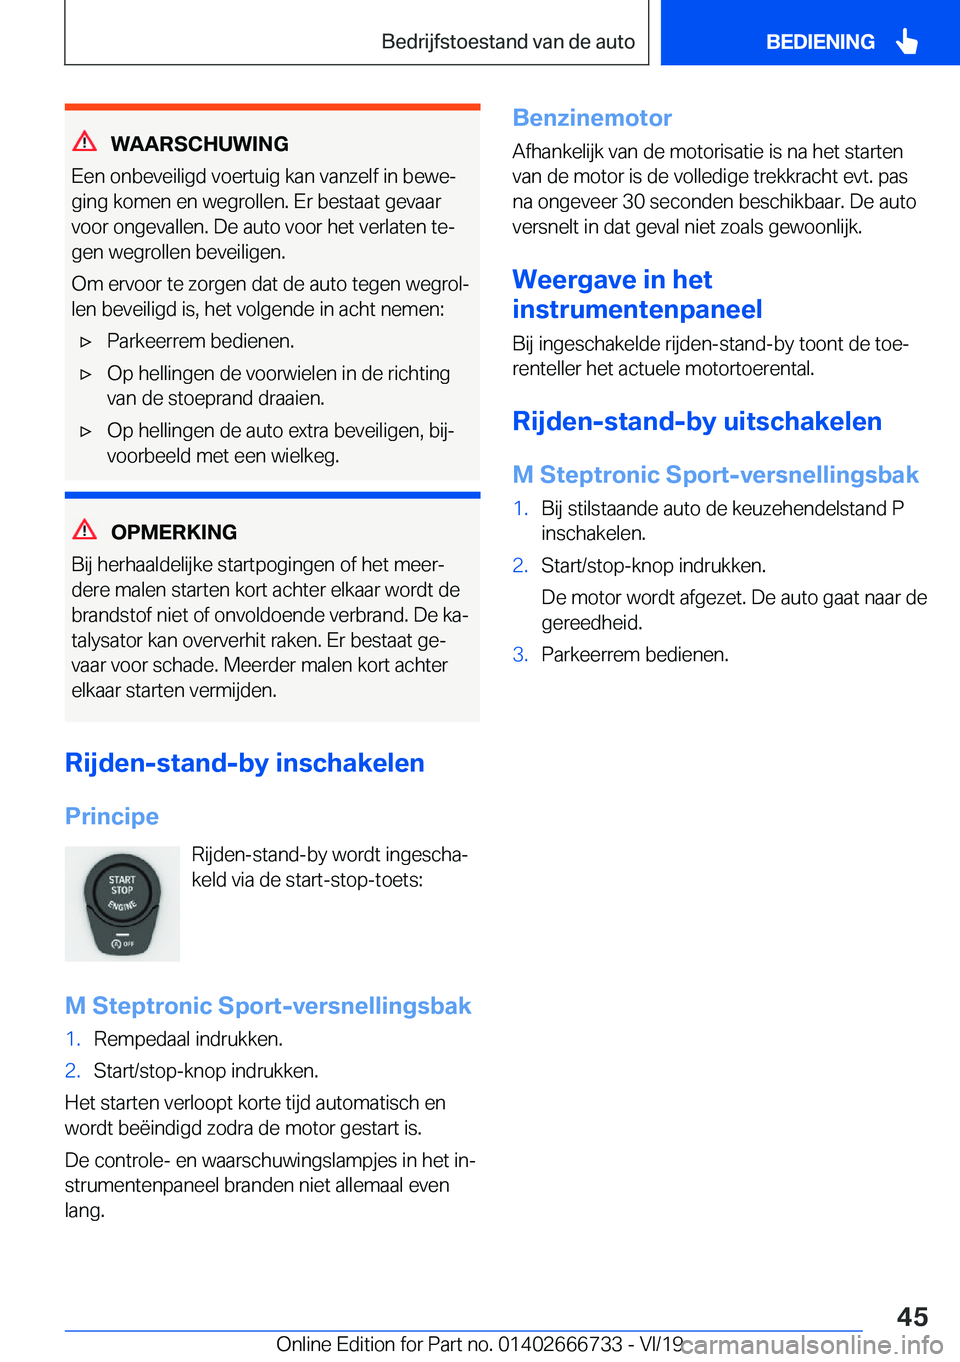 BMW M5 2020  Instructieboekjes (in Dutch) �W�A�A�R�S�C�H�U�W�I�N�G
�E�e�n��o�n�b�e�v�e�i�l�i�g�d��v�o�e�r�t�u�i�g��k�a�n��v�a�n�z�e�l�f��i�n��b�e�w�ej �g�i�n�g��k�o�m�e�n��e�n��w�e�g�r�o�l�l�e�n�.��E�r��b�e�s�t�a�a�t��g�e�v�a�a�r